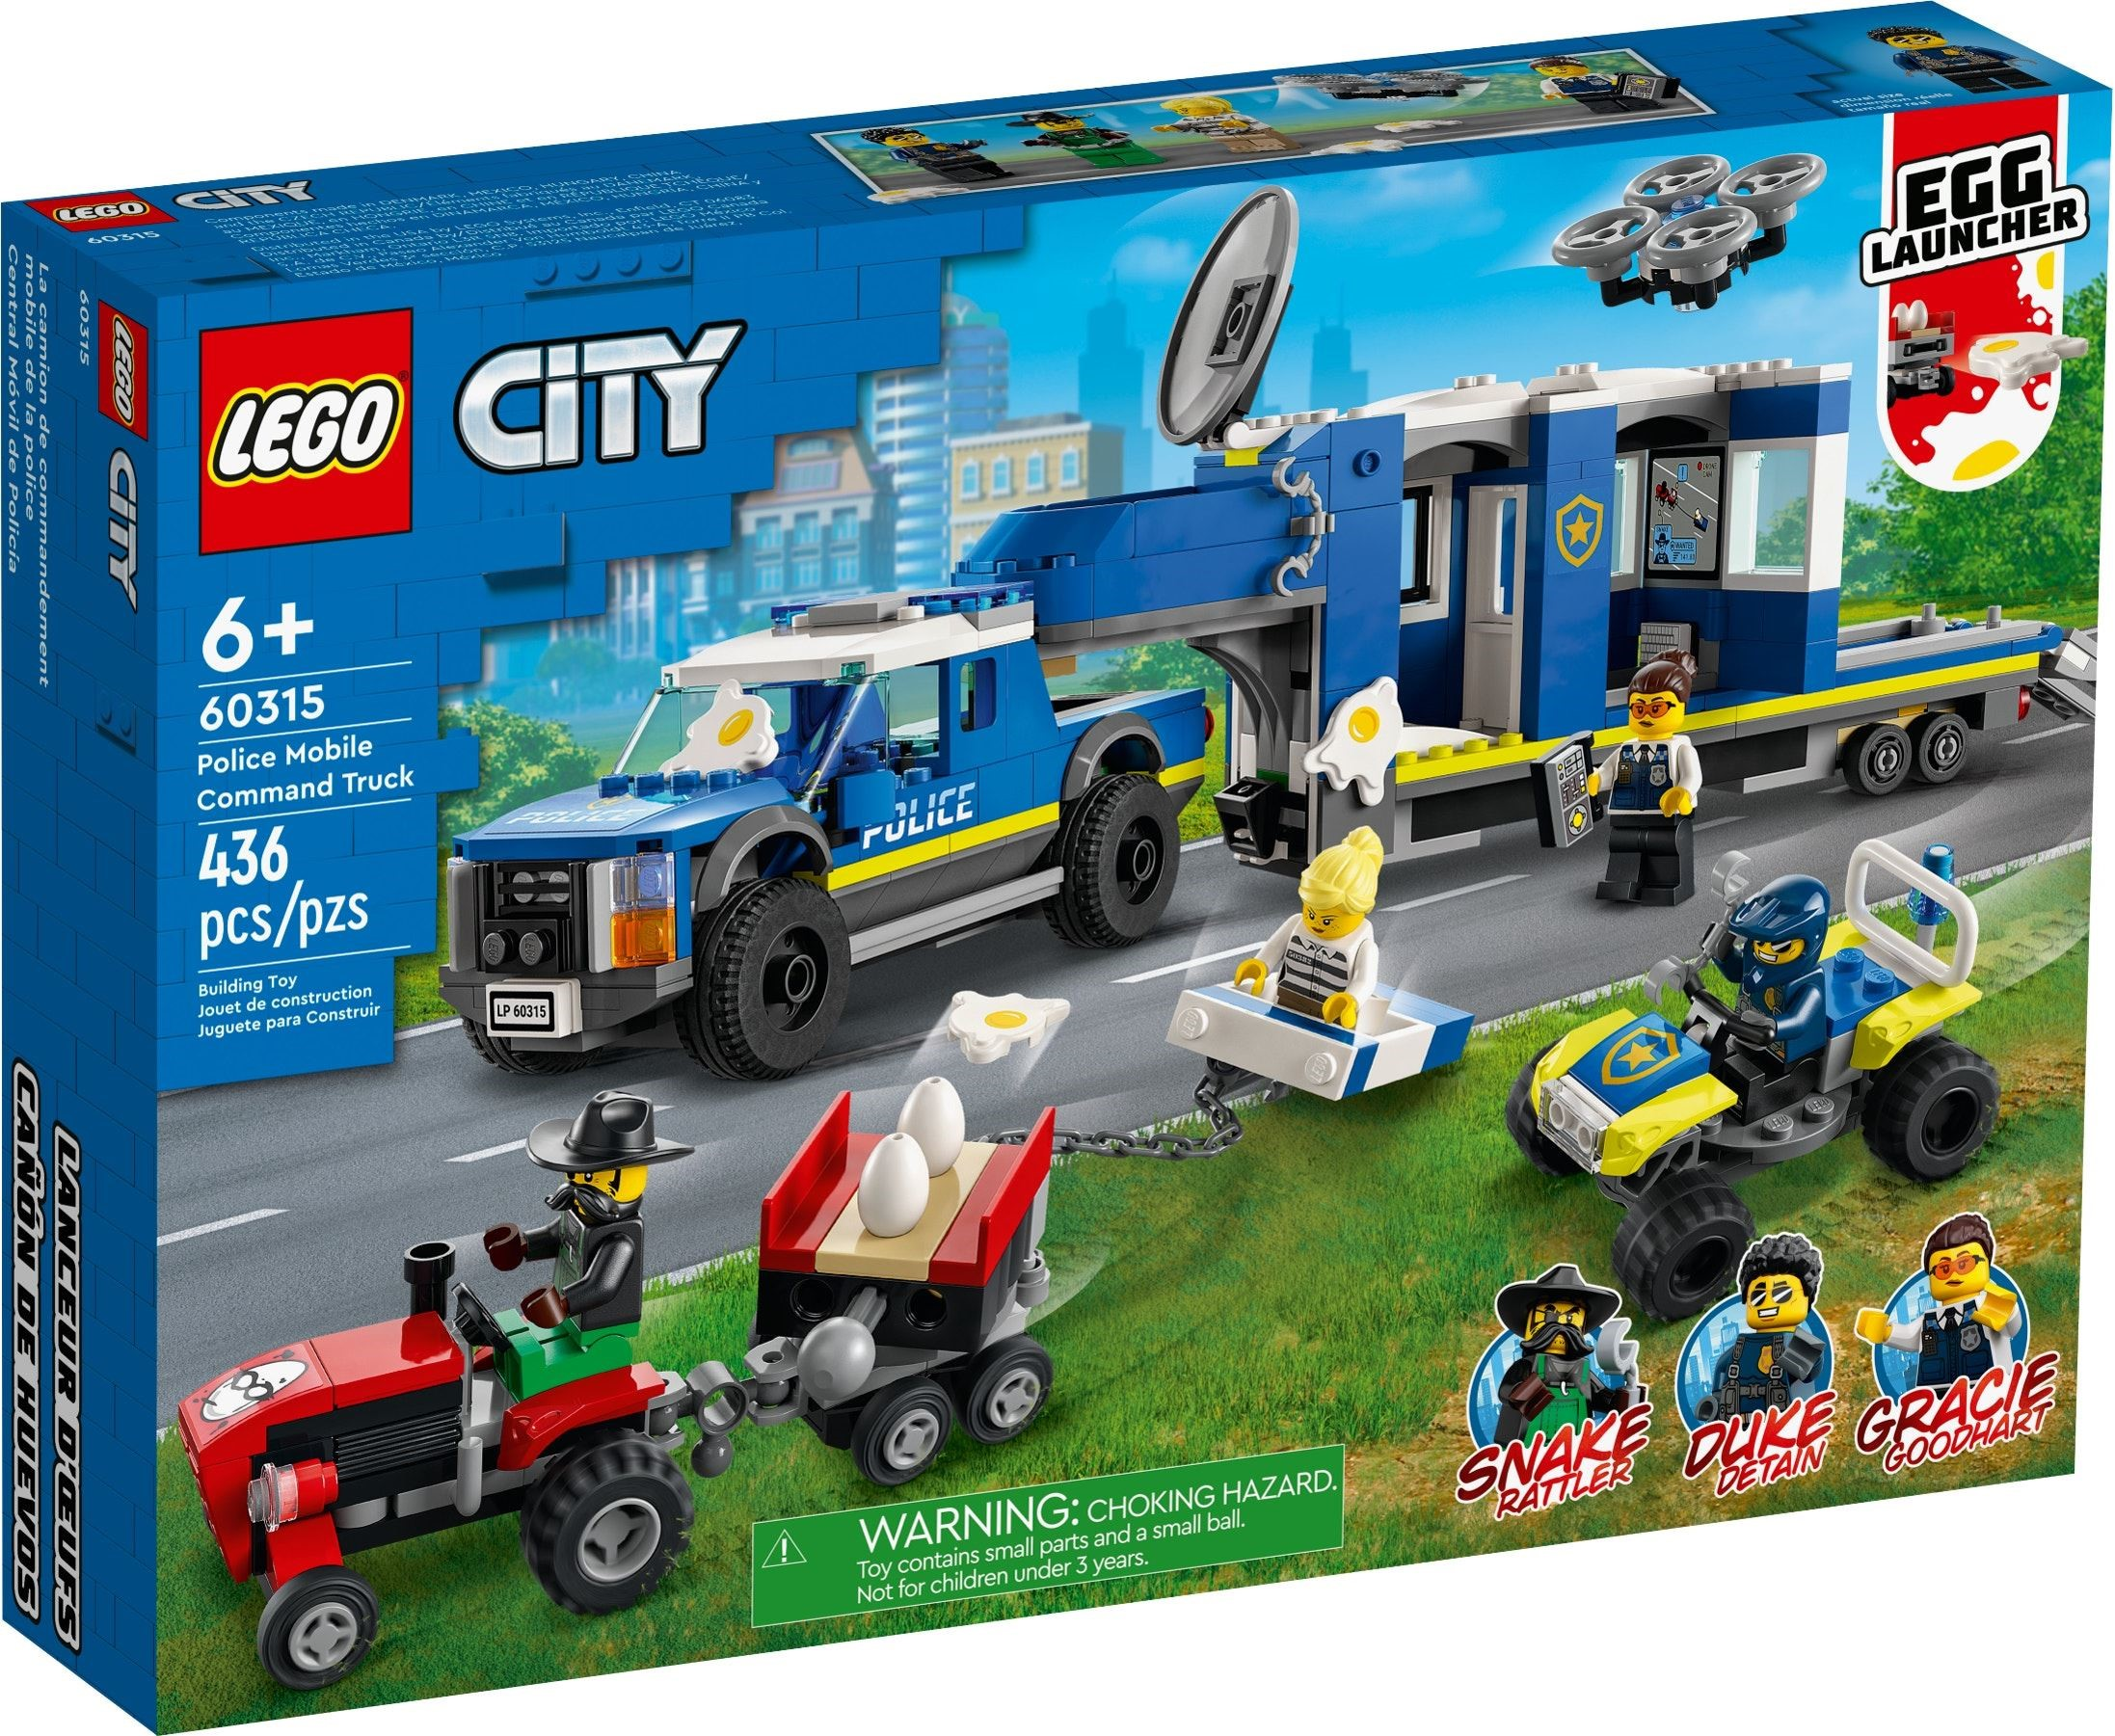 60315 Police Mobile Command Truck | Lego City Adventures Wiki | Fandom